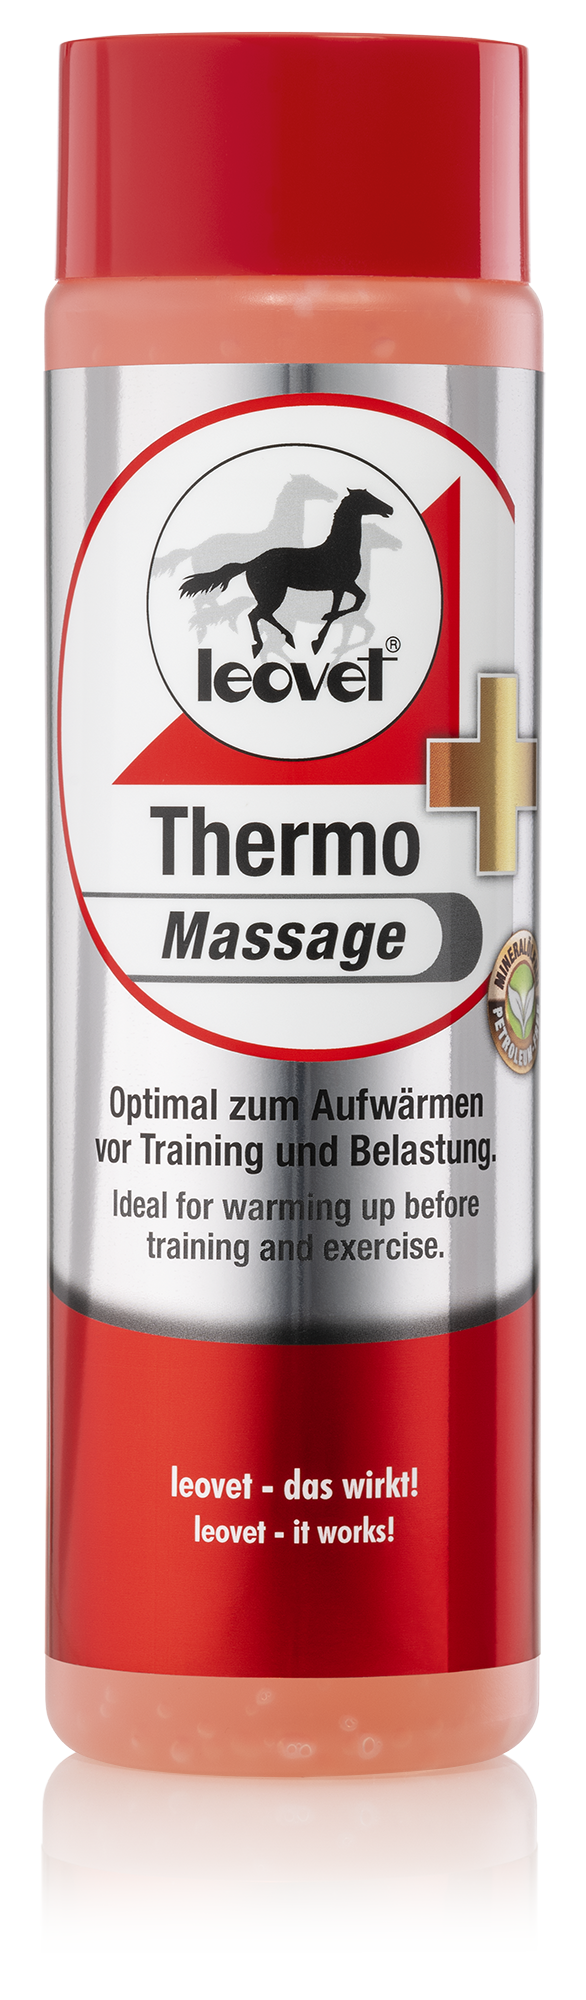 Massage-Gel Thermo